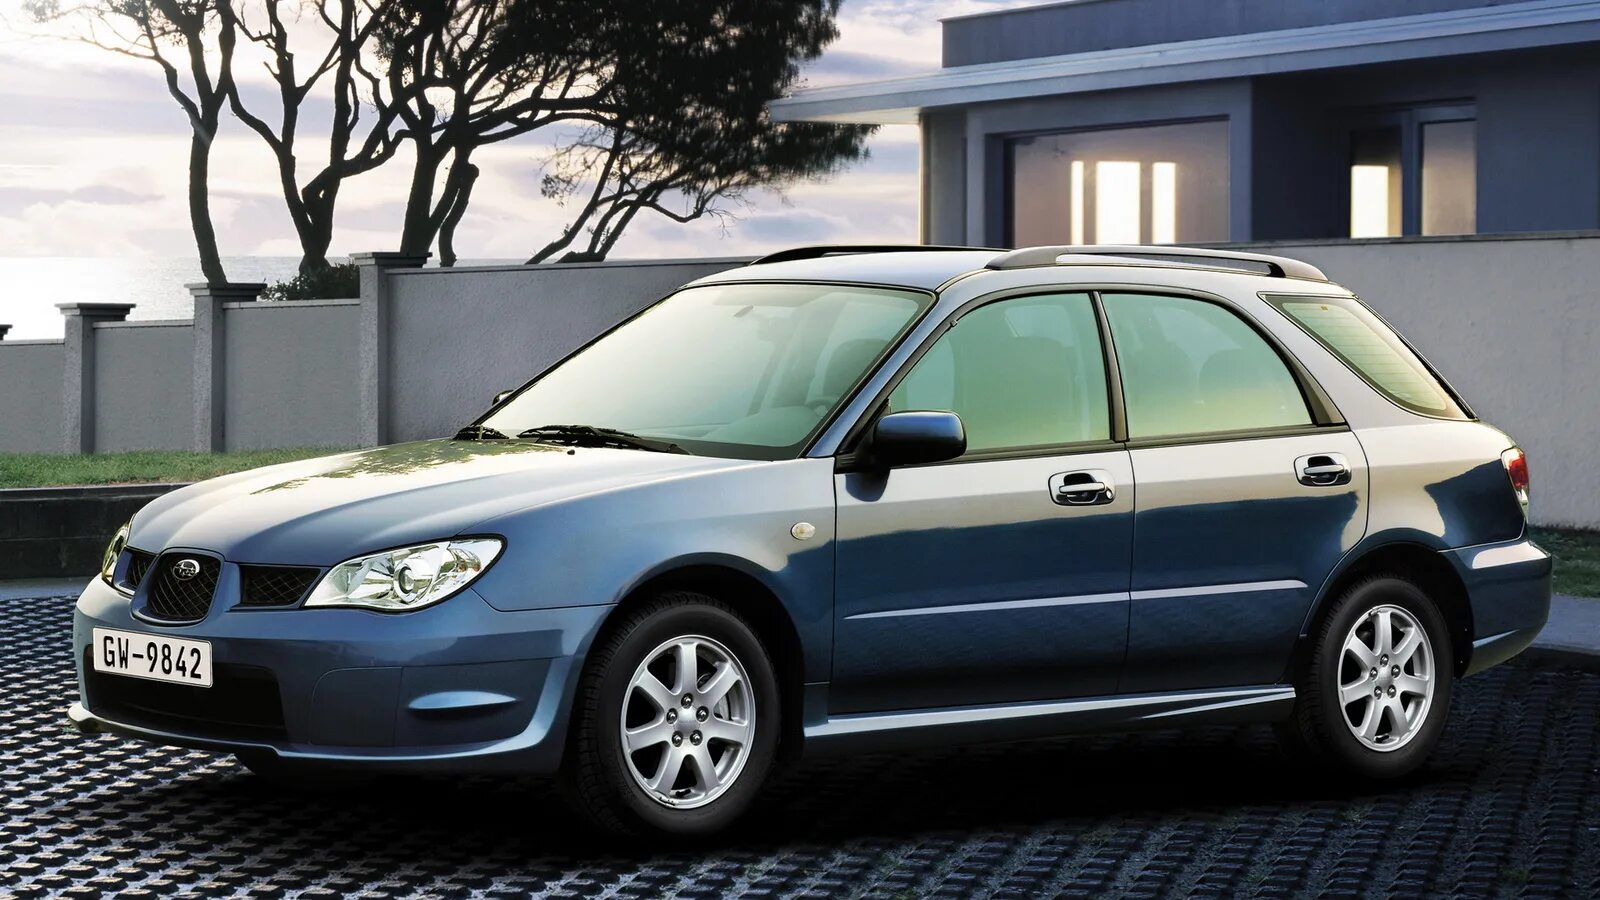 2000 2007 года. Субару Импреза 2006 универсал. Субару Импреза 2005 универсал. Субару Импреза универсал 2007. Subaru Impreza 2 поколение универсал.